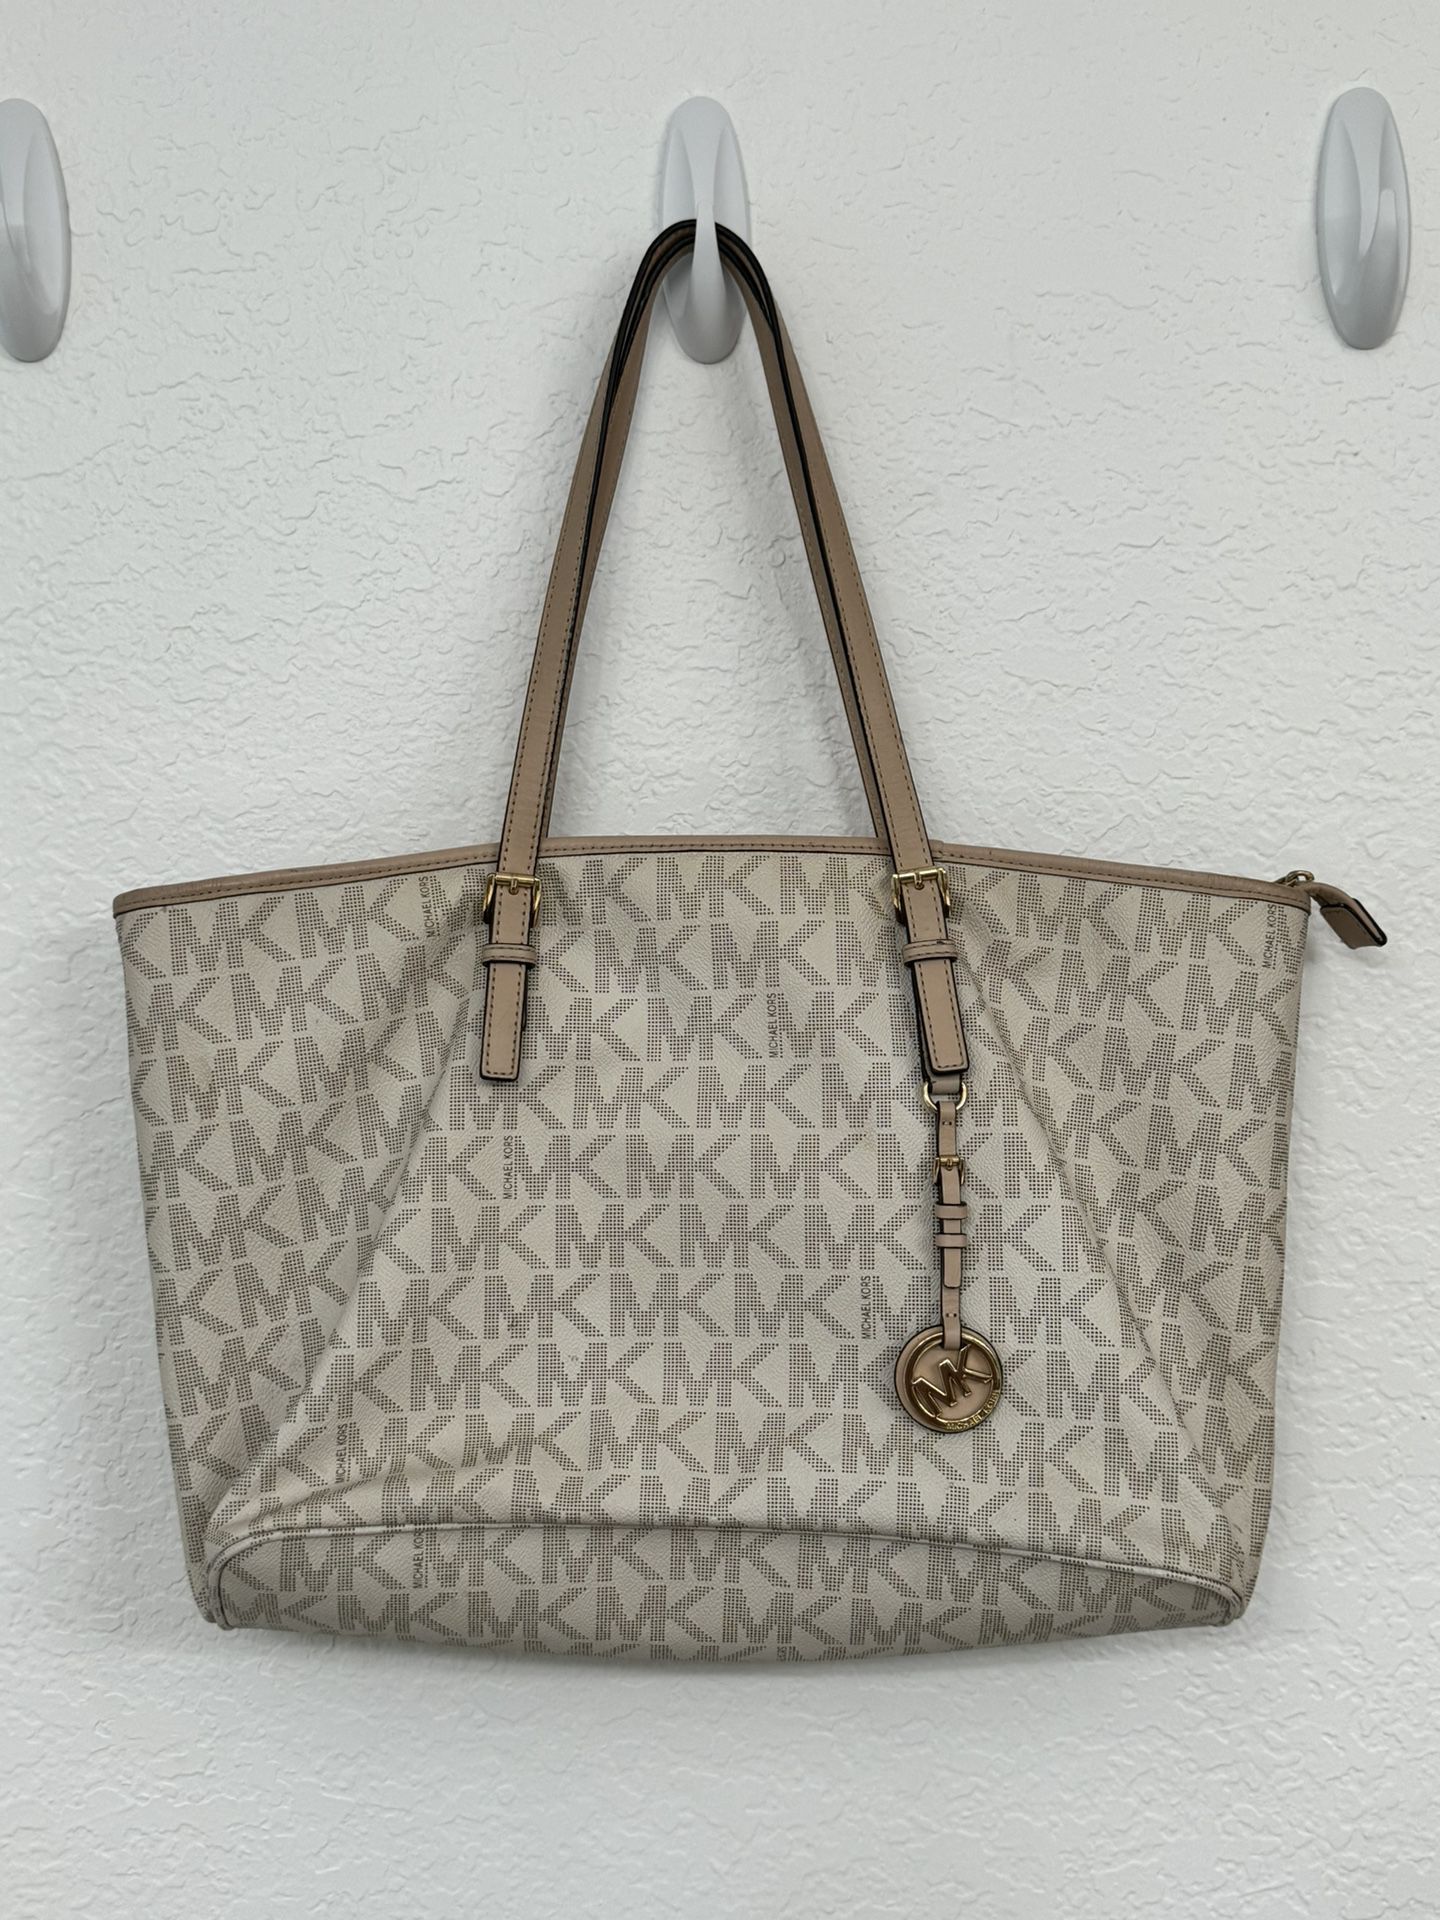 Used Michael Kors Purse Handbag Large $75 !!!ACCEPTING OFFERS!!!